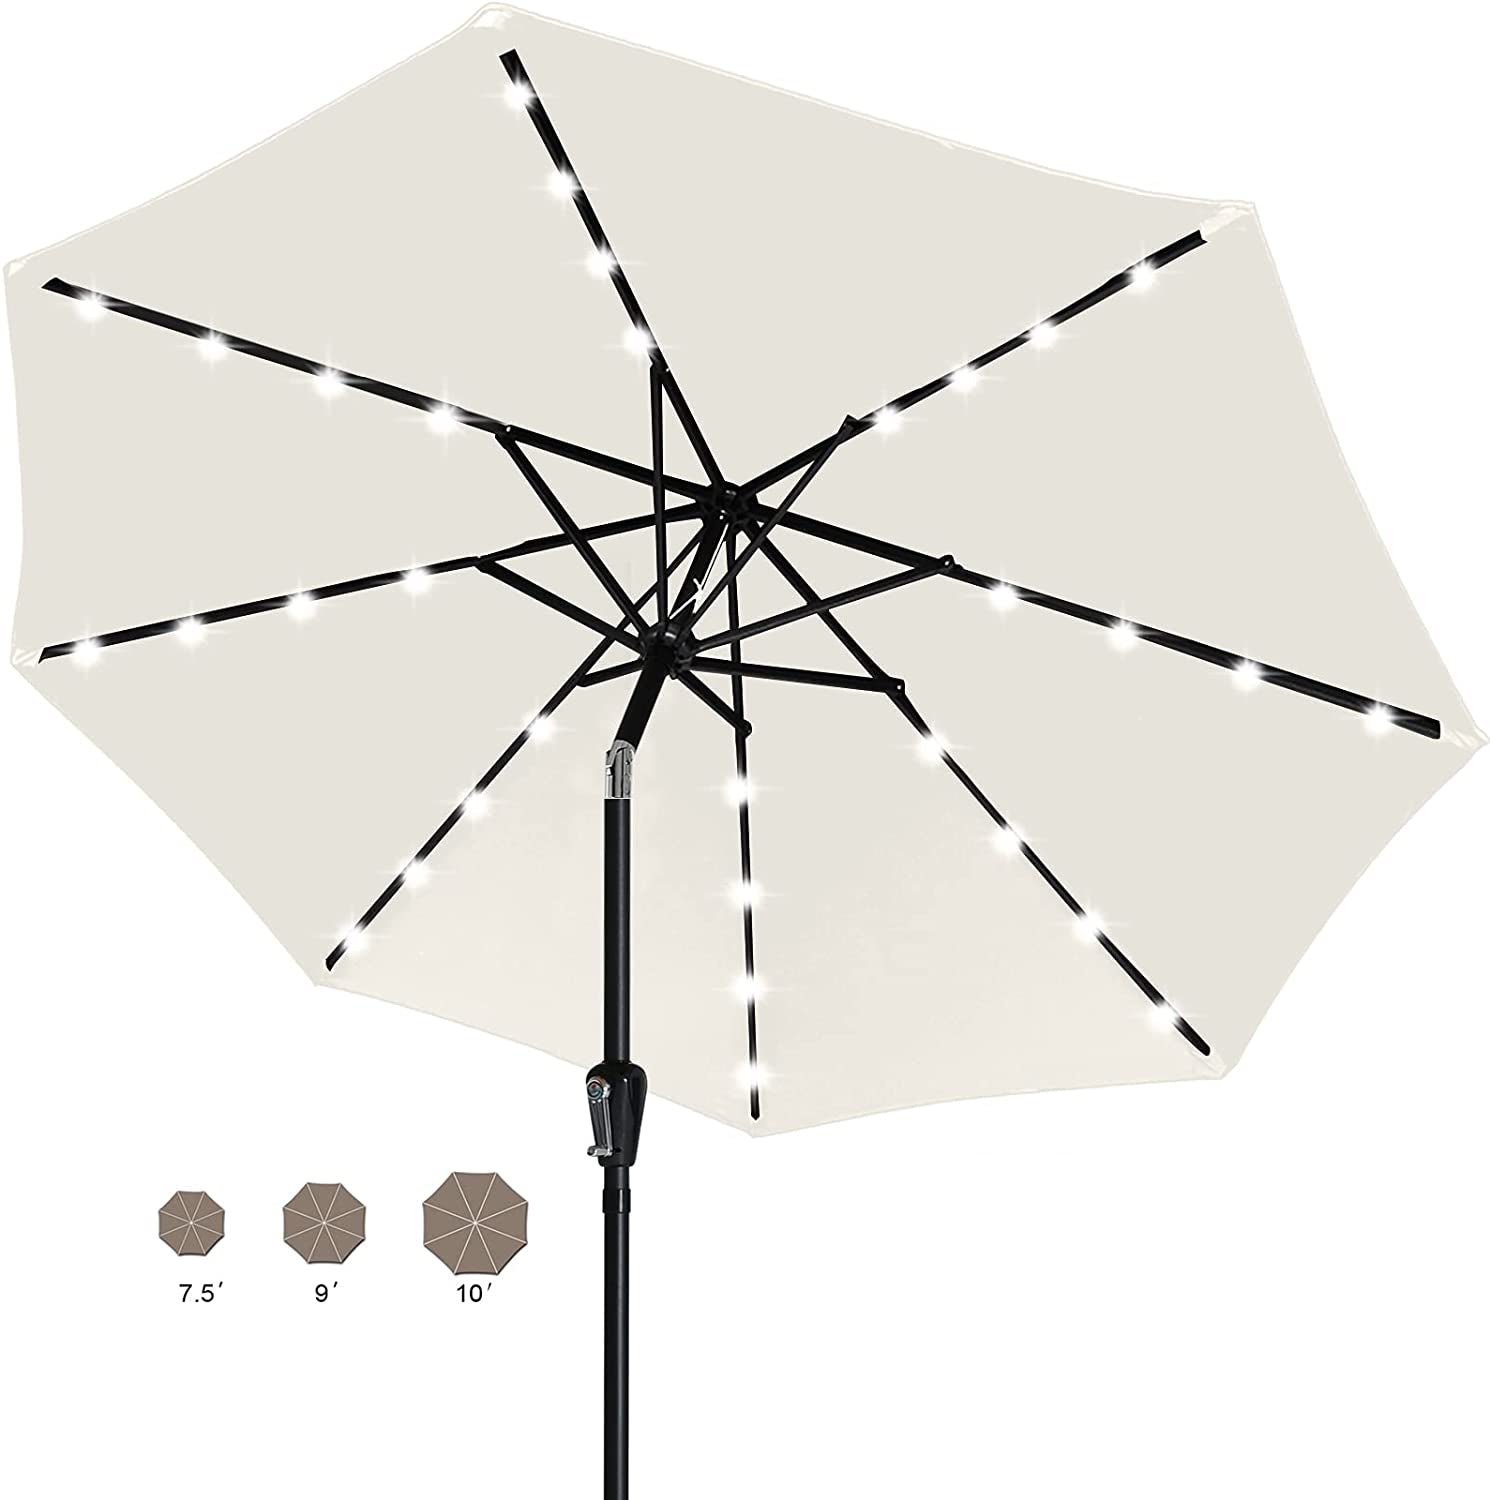 10 ft. Steel Market Tilt Patio Umbrella with Crank and Solar LED in Beige